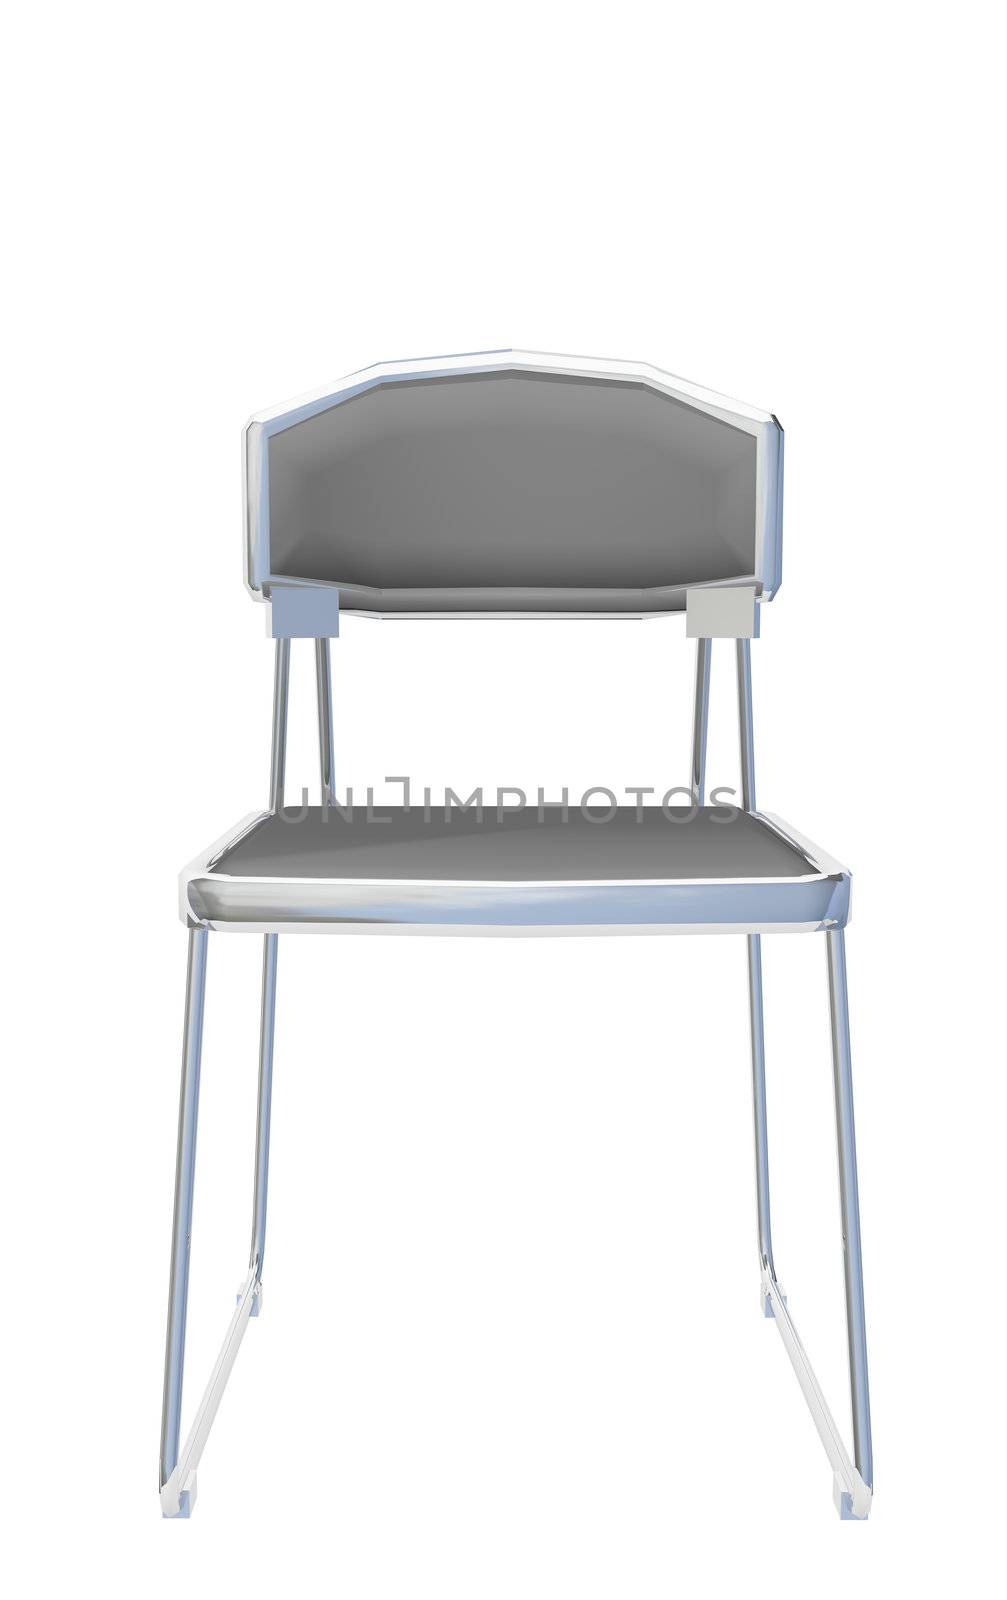 Modern simple gray metallic chair by Morphart